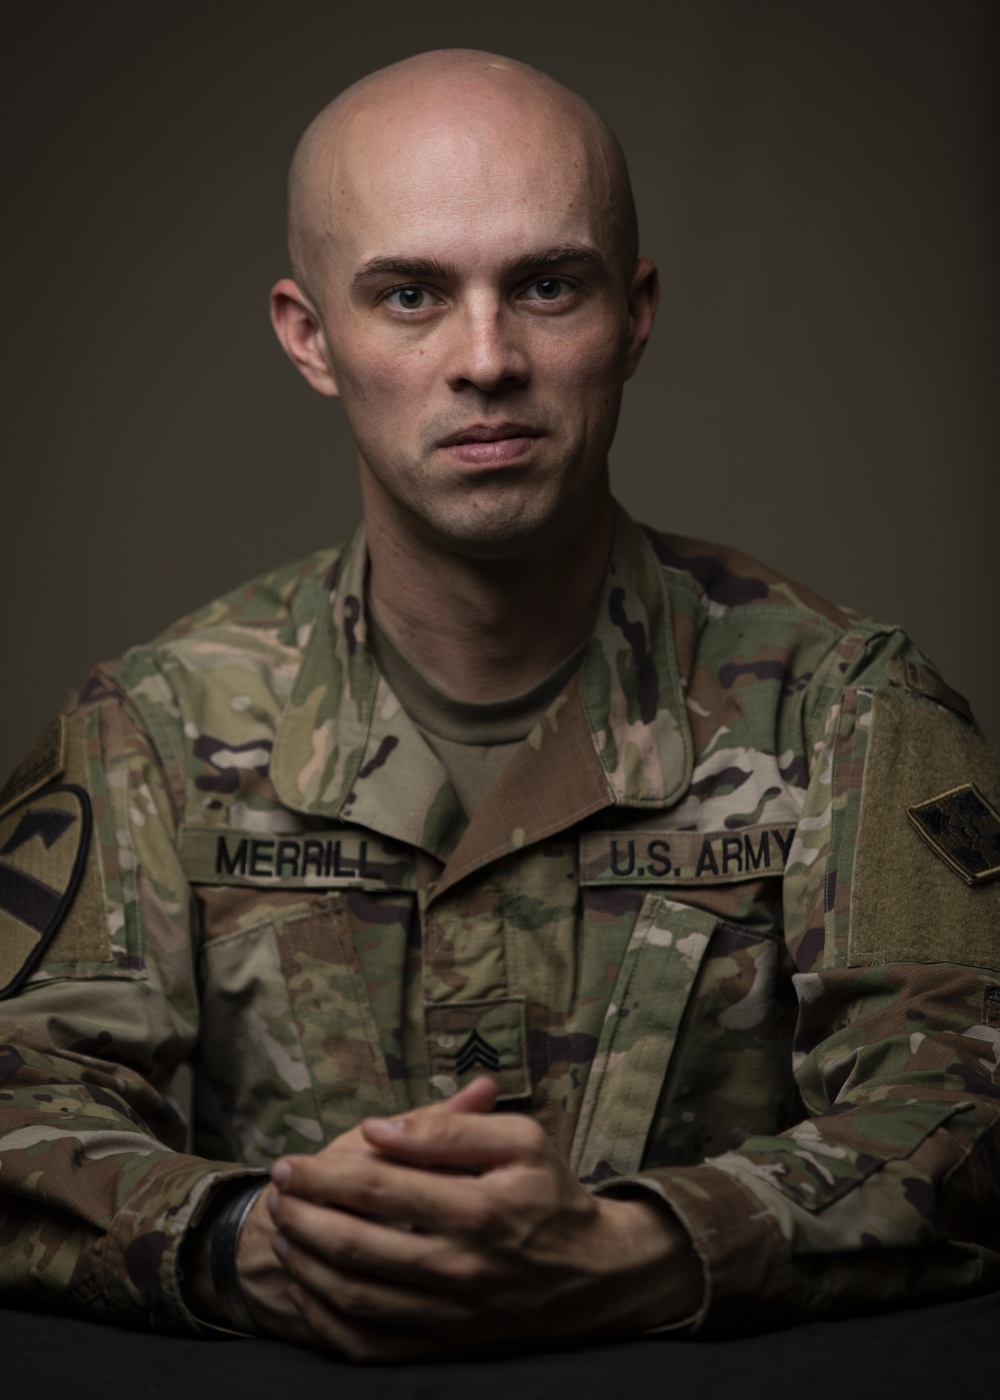 Sgt. Merrill Portrait